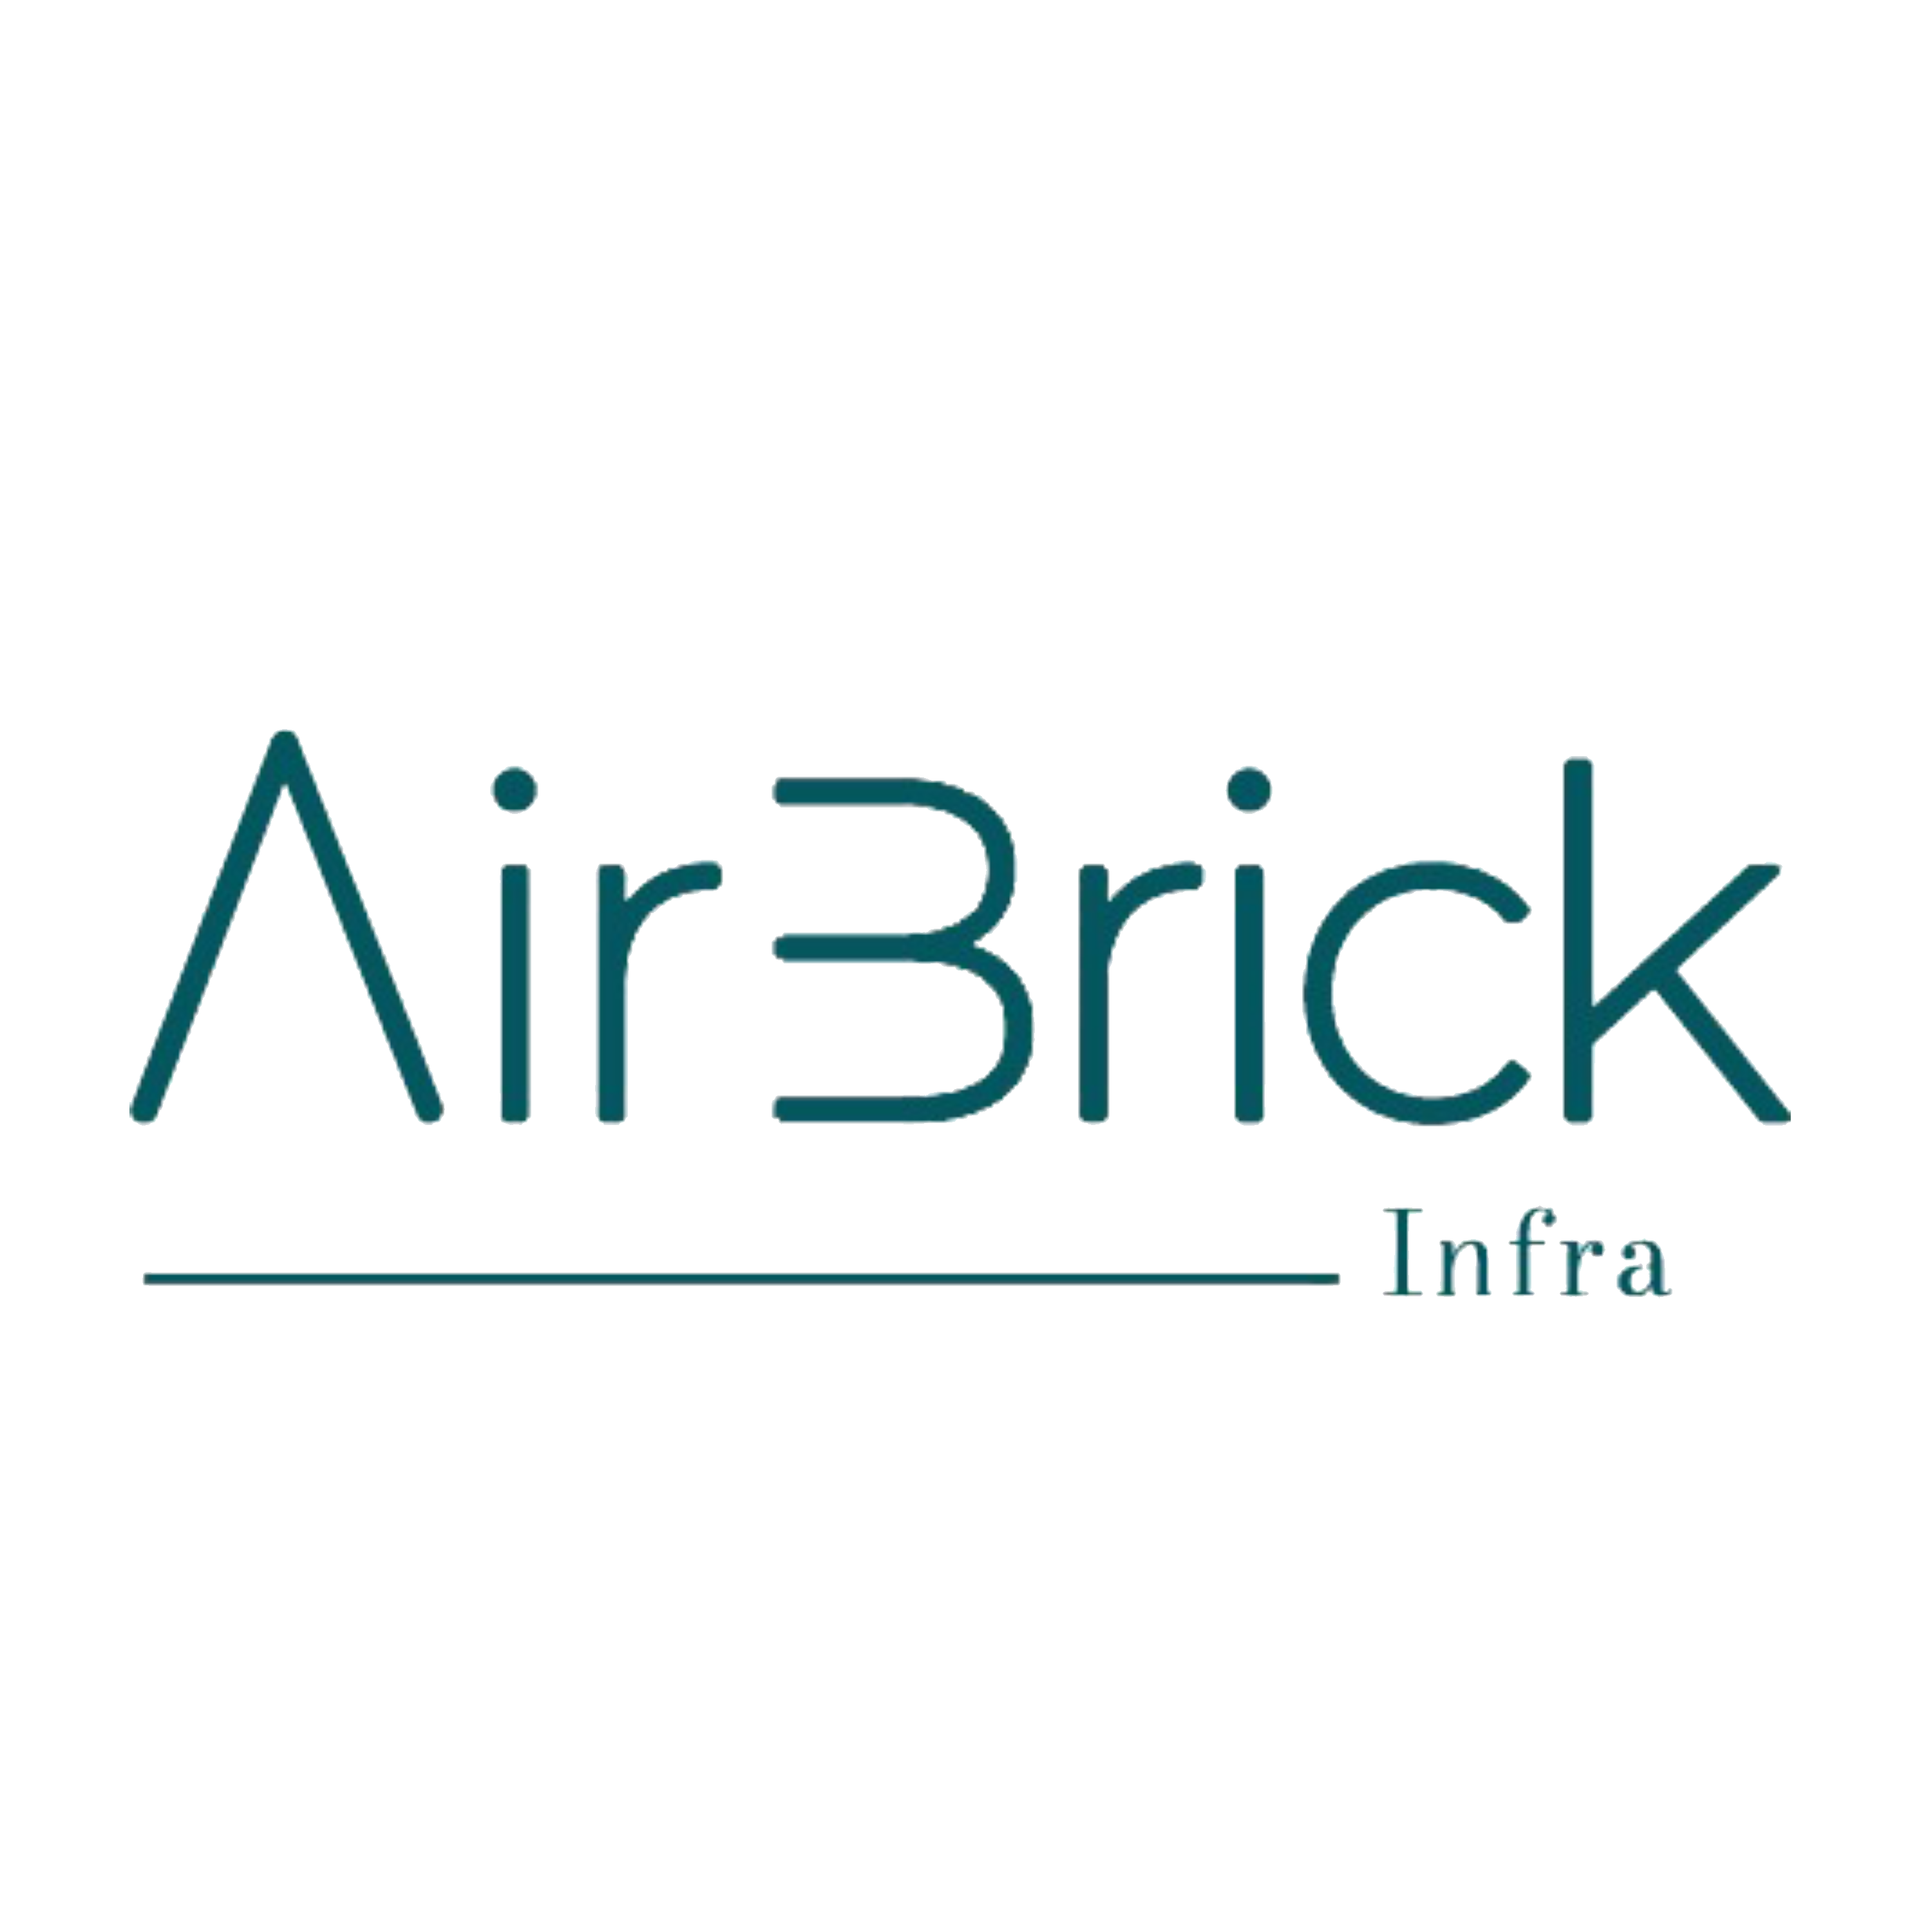 Airbrick Logo  Transparent Image